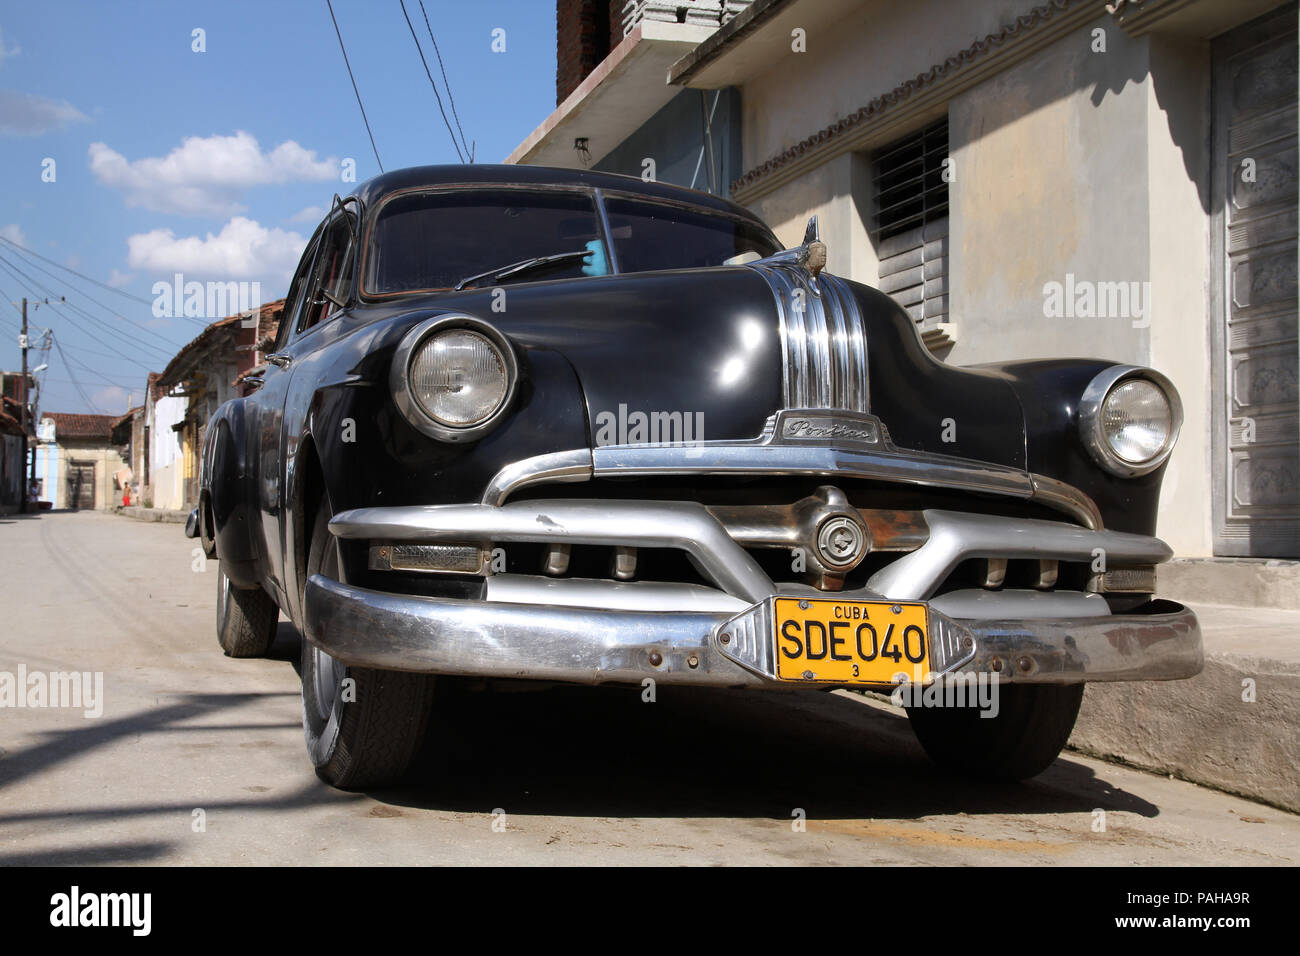 SANCTI SPIRITUS, CUBA - FEBRUARY 6: Classic American Pontiac car in the street on February 6, 2011 in Sancti Spiritus. Recent change in law allows the Stock Photo